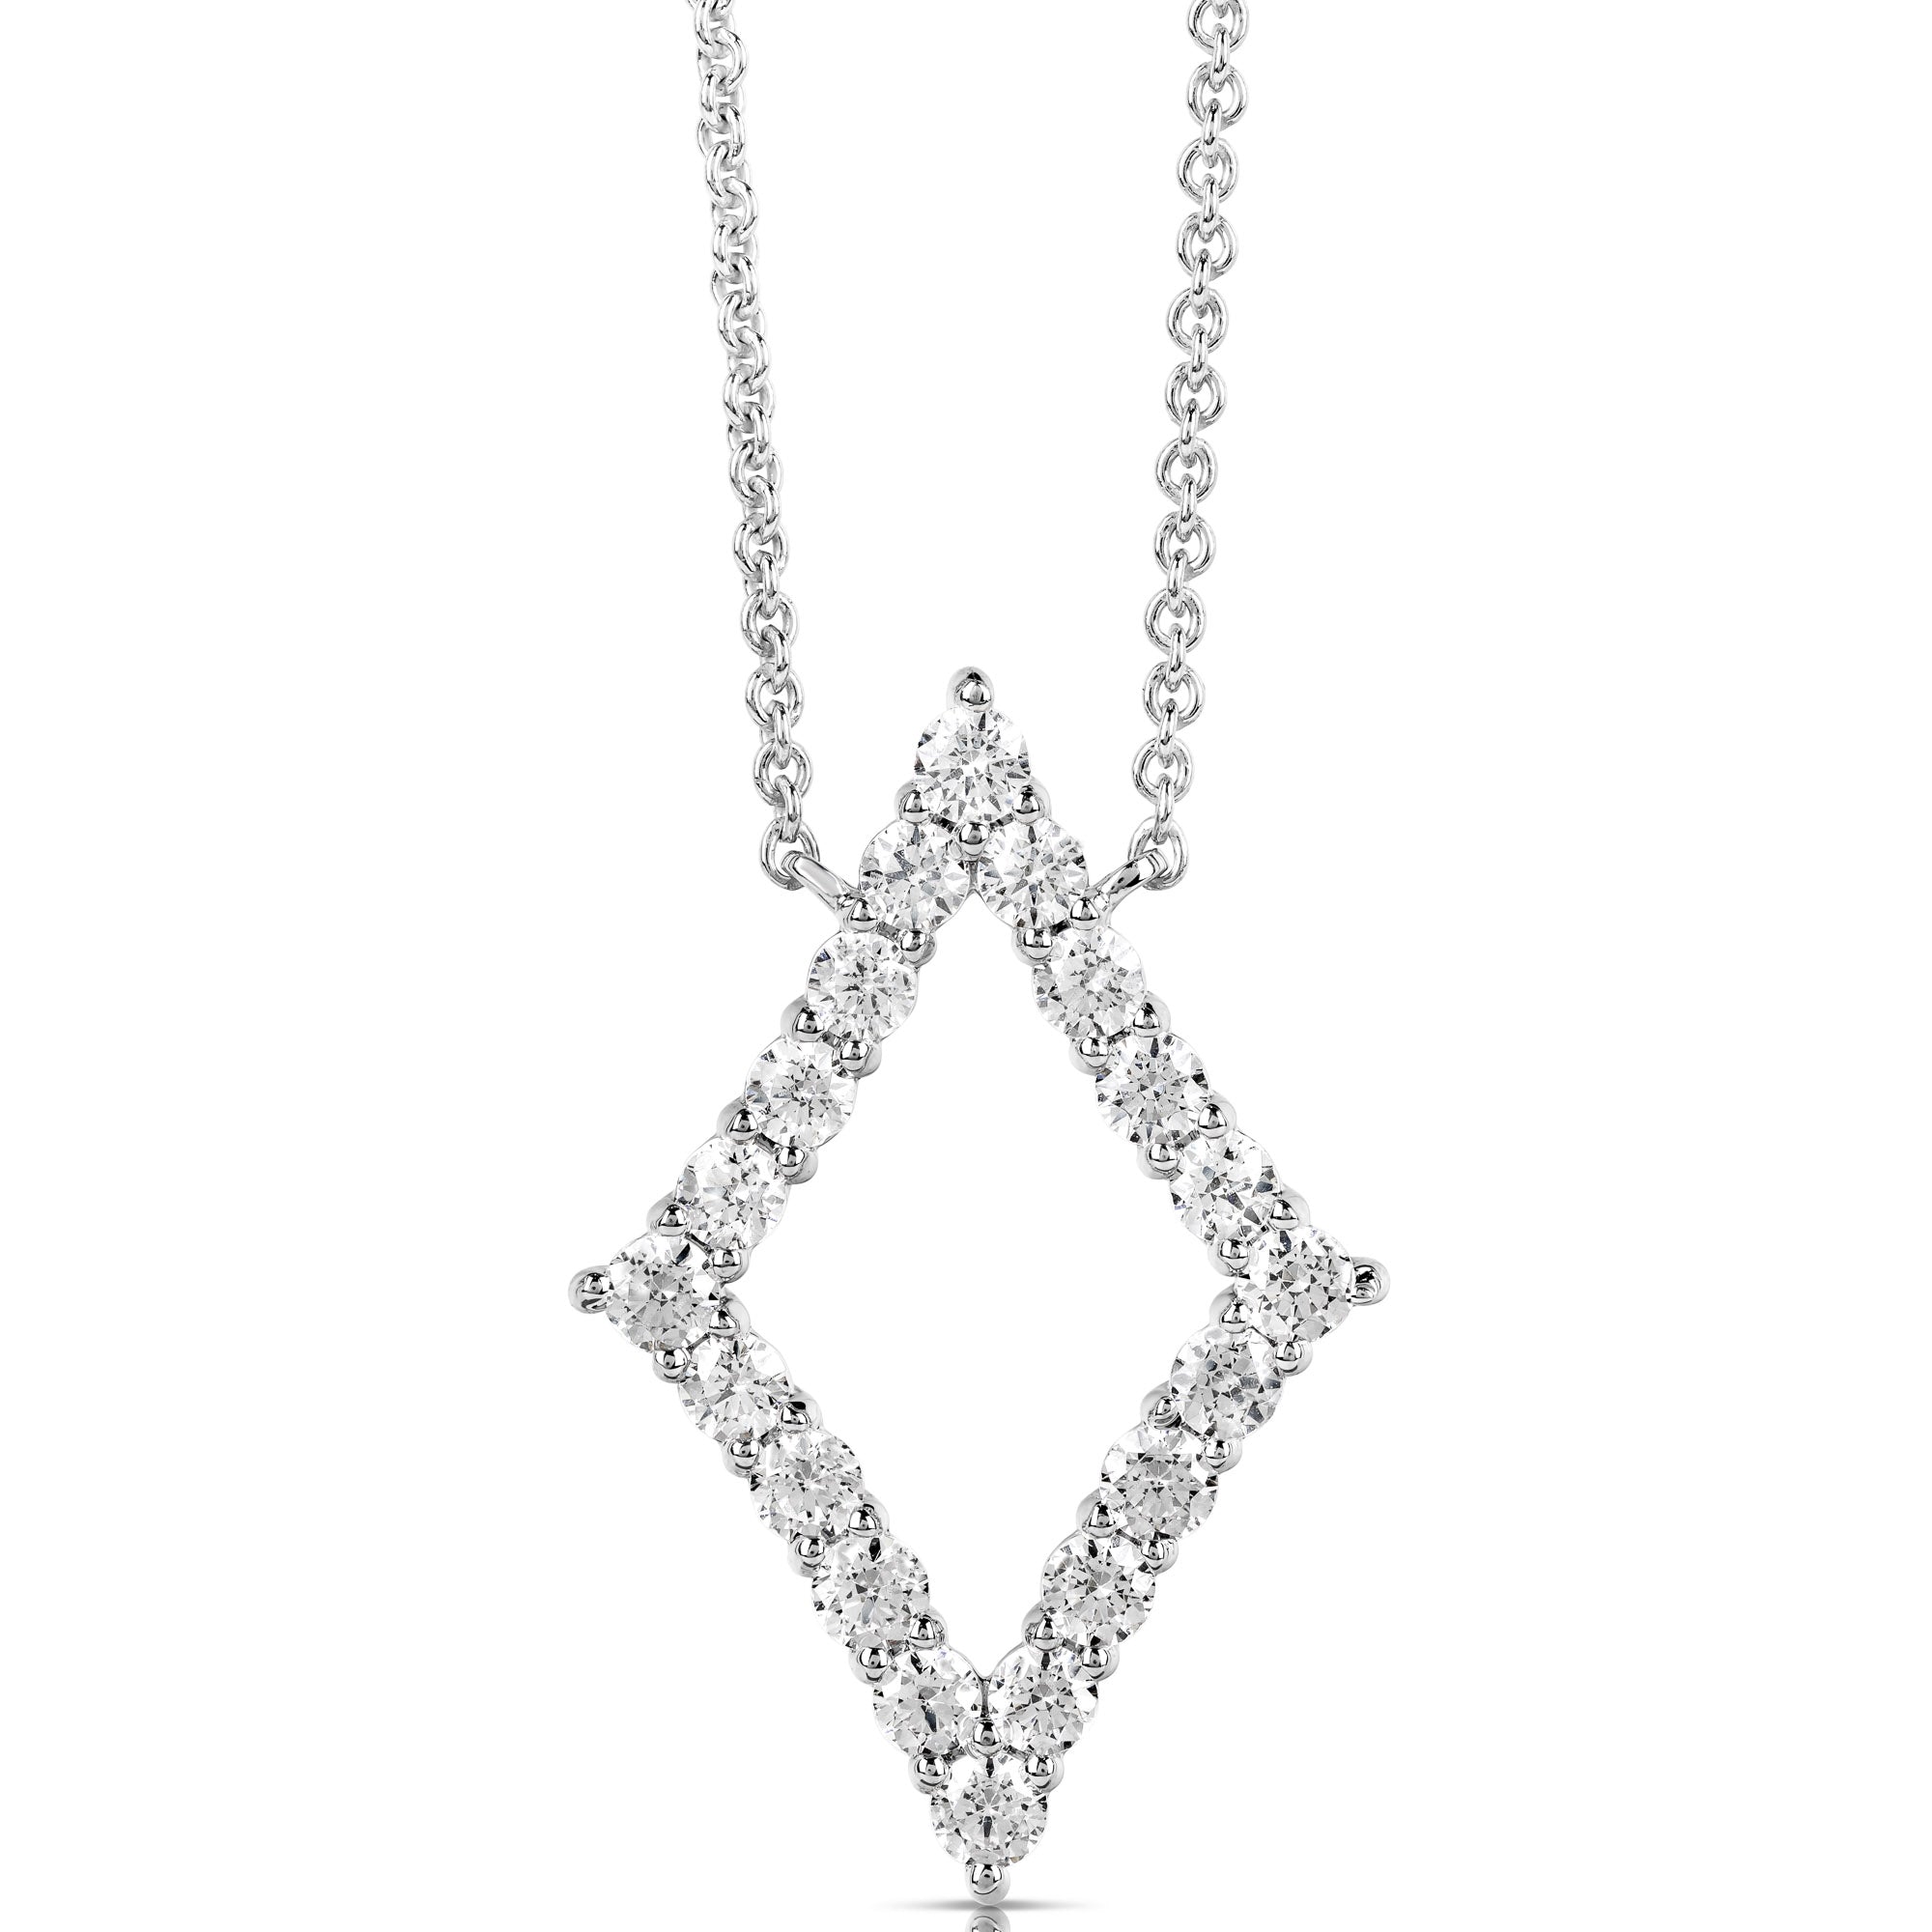 Lab-Grown Diamond 1½ct. Round Brilliant Solitaire Pendant | White -  #Lightbox Jewelry